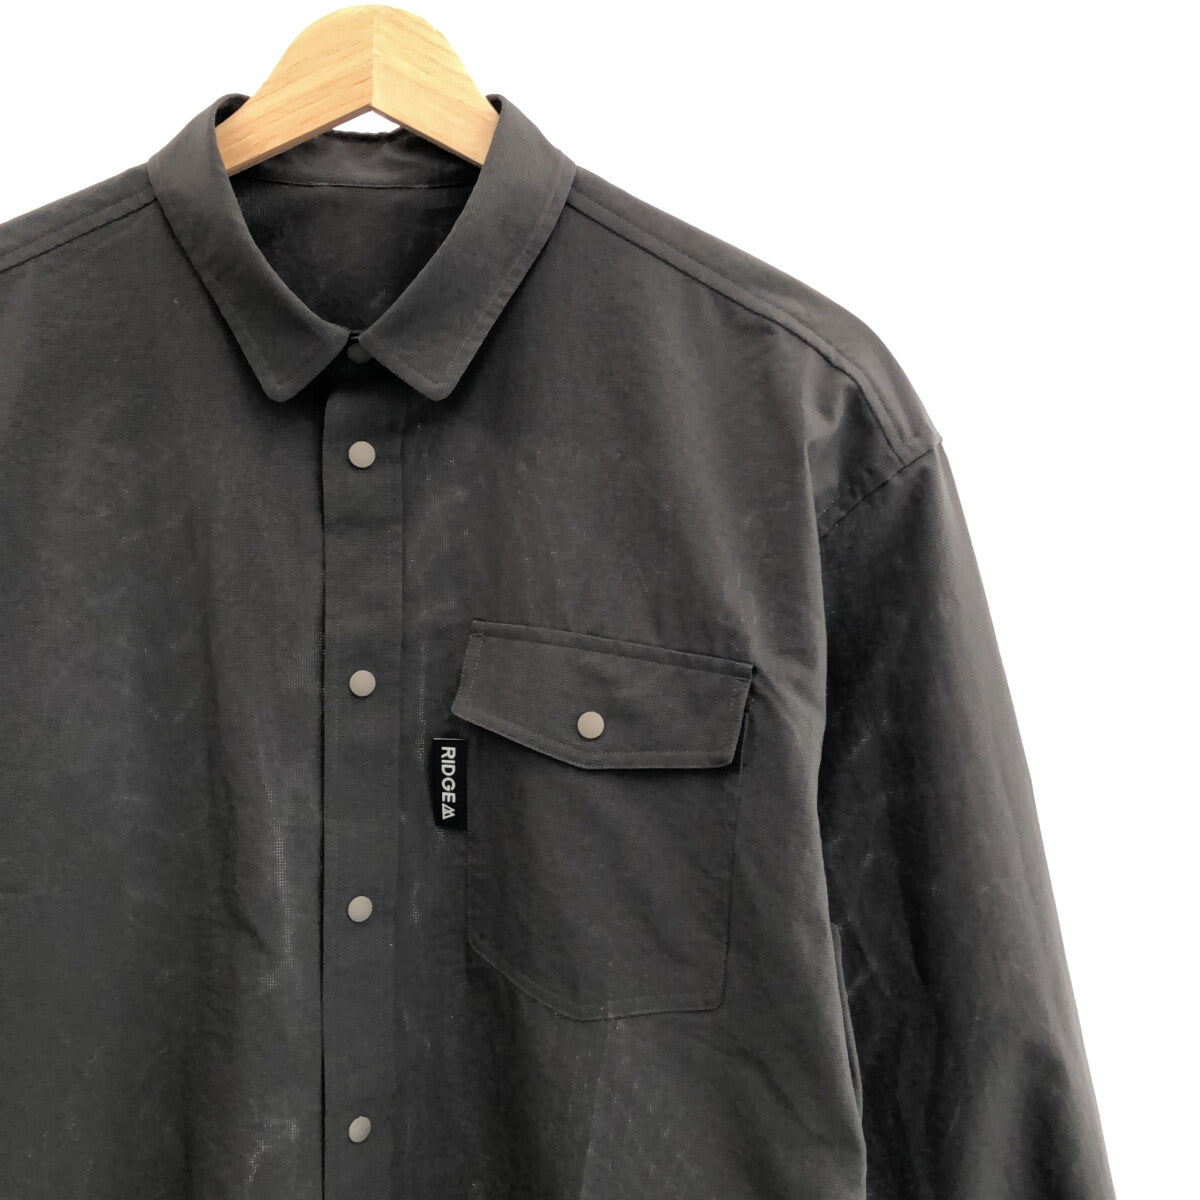 RIDGE MOUNTAIN GEAR / リッジ マウンテン ギア | Poly Basic Long Sleeve Shirt /  ポリベーシックロングスリーブシャツ | S |